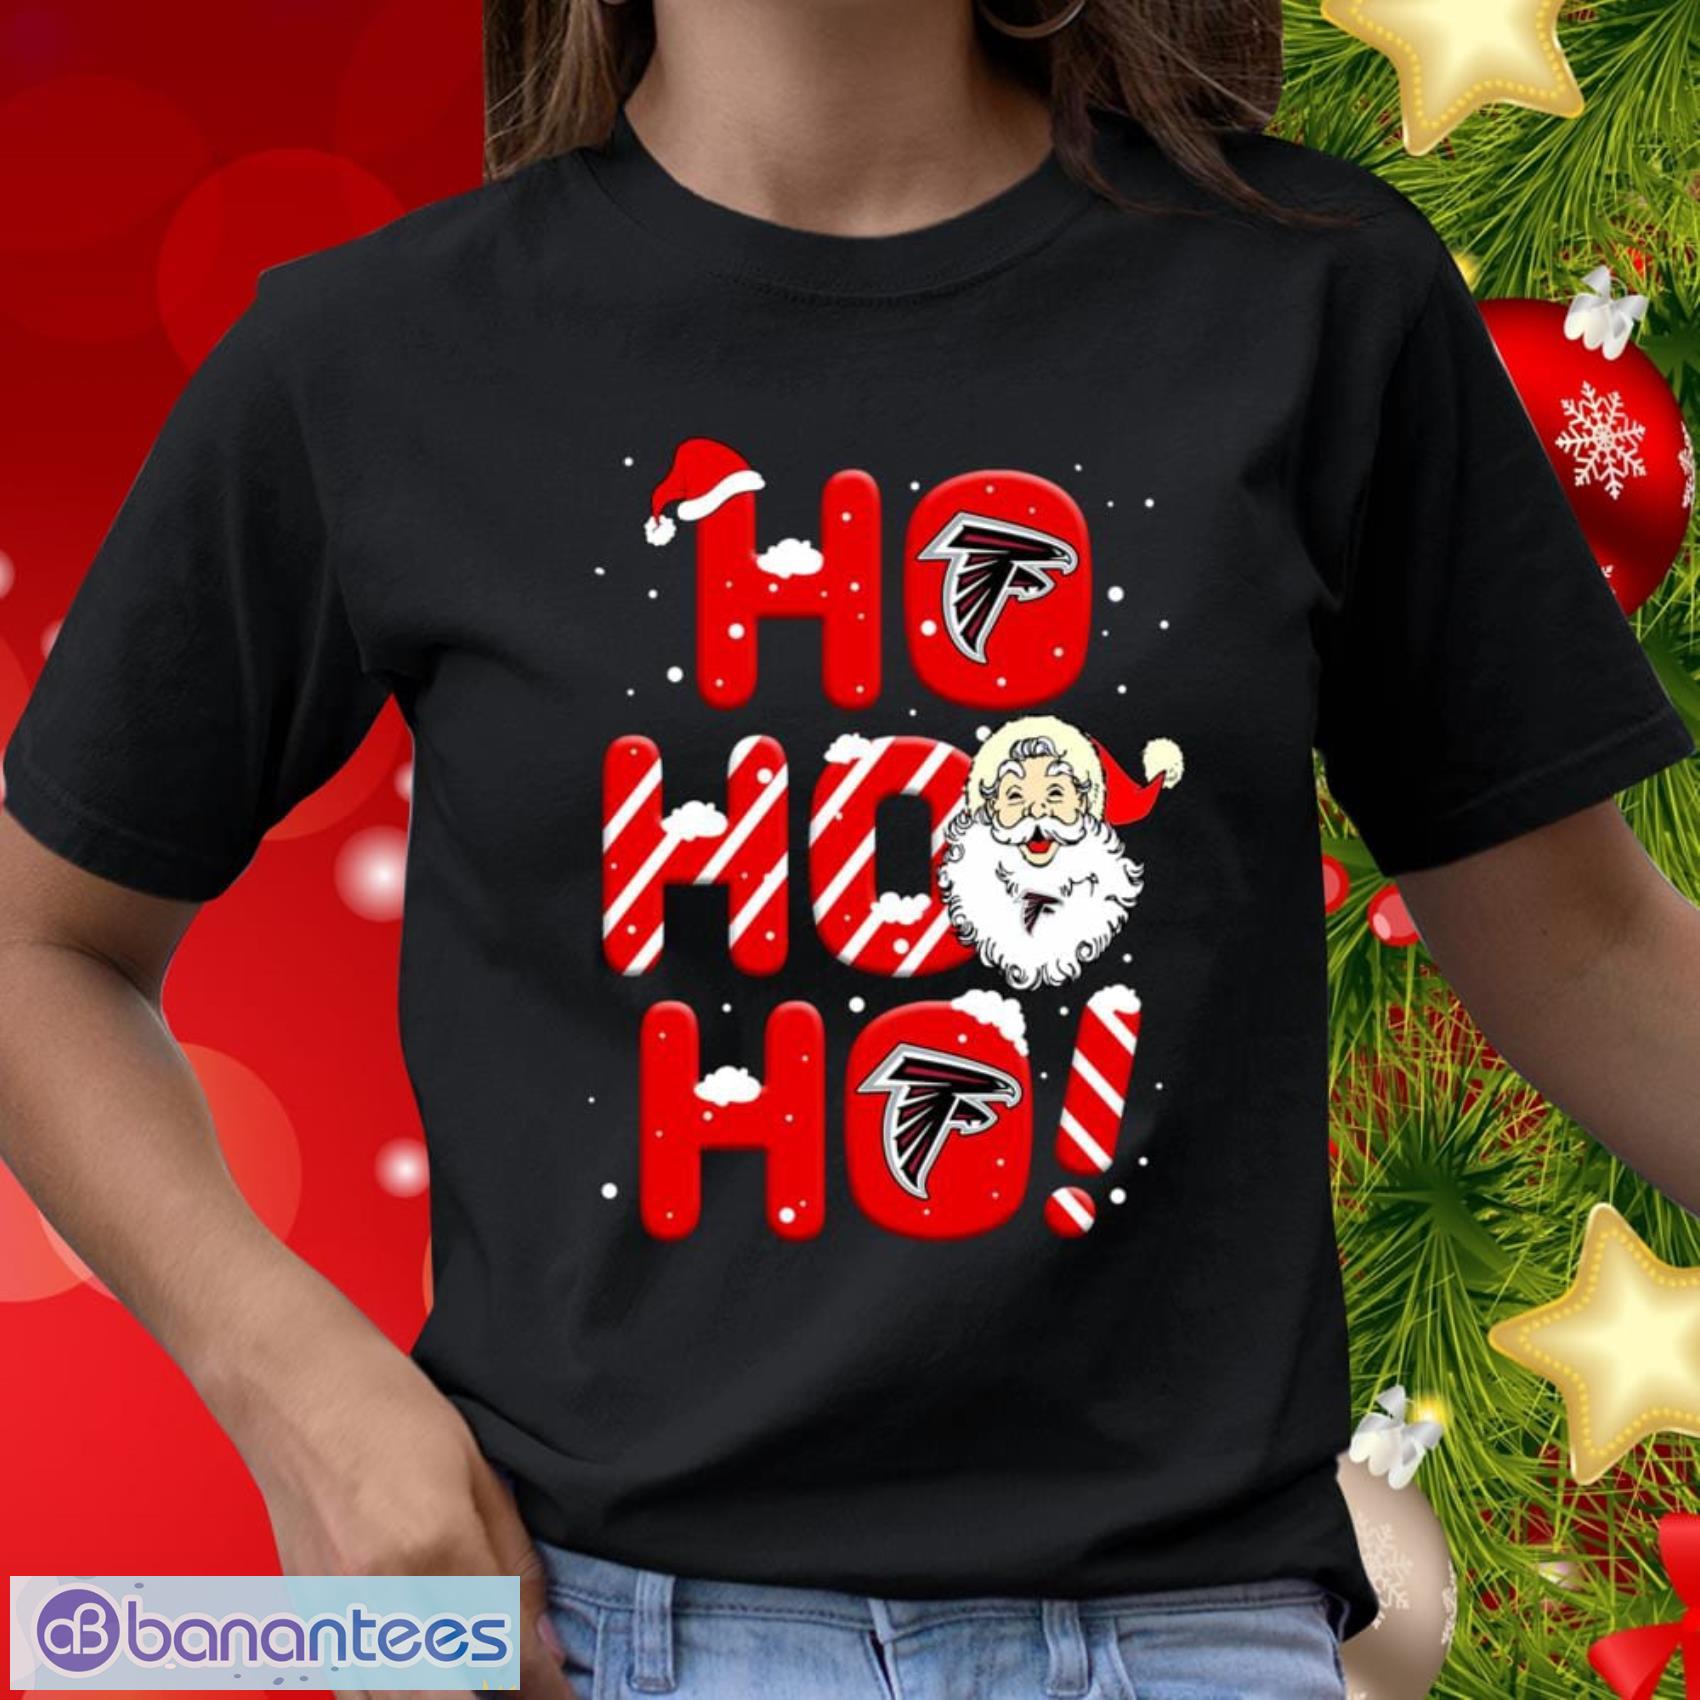 Atlanta Falcons NFL Football Gift Fr Fans Ho Ho Ho Santa Claus Merry Christmas Shirt T Shirt - Atlanta Falcons NFL Football Ho Ho Ho Santa Claus Merry Christmas Shirt T Shirt_2